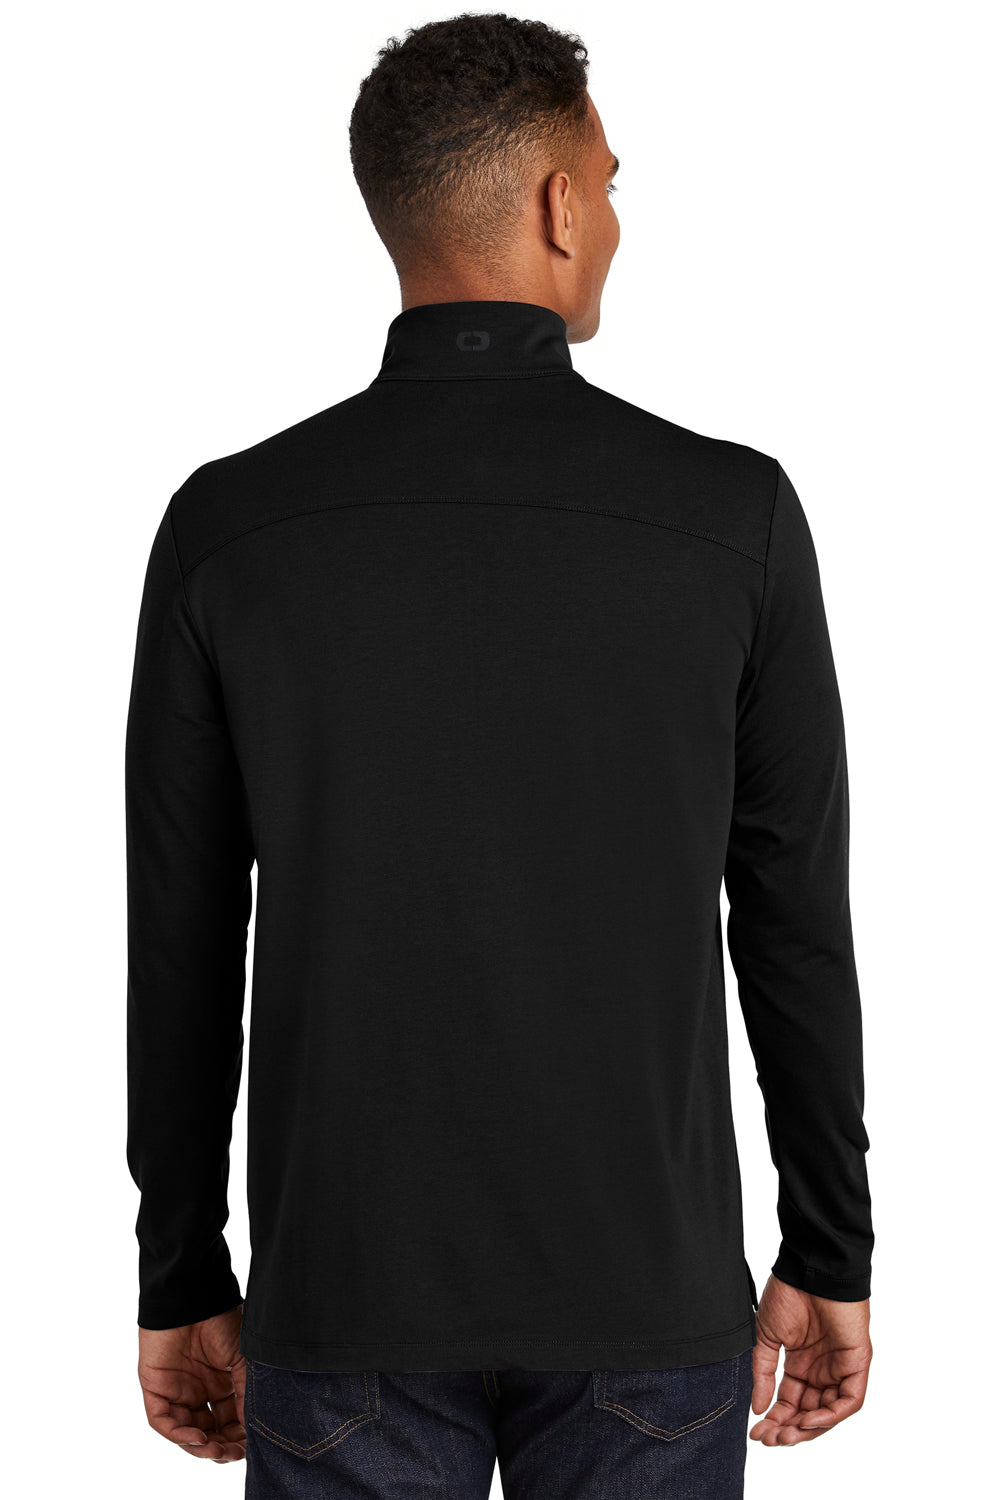 Ogio OG139 Mens Limit Moisture Wicking 1/4 Zip Sweatshirt Black Back